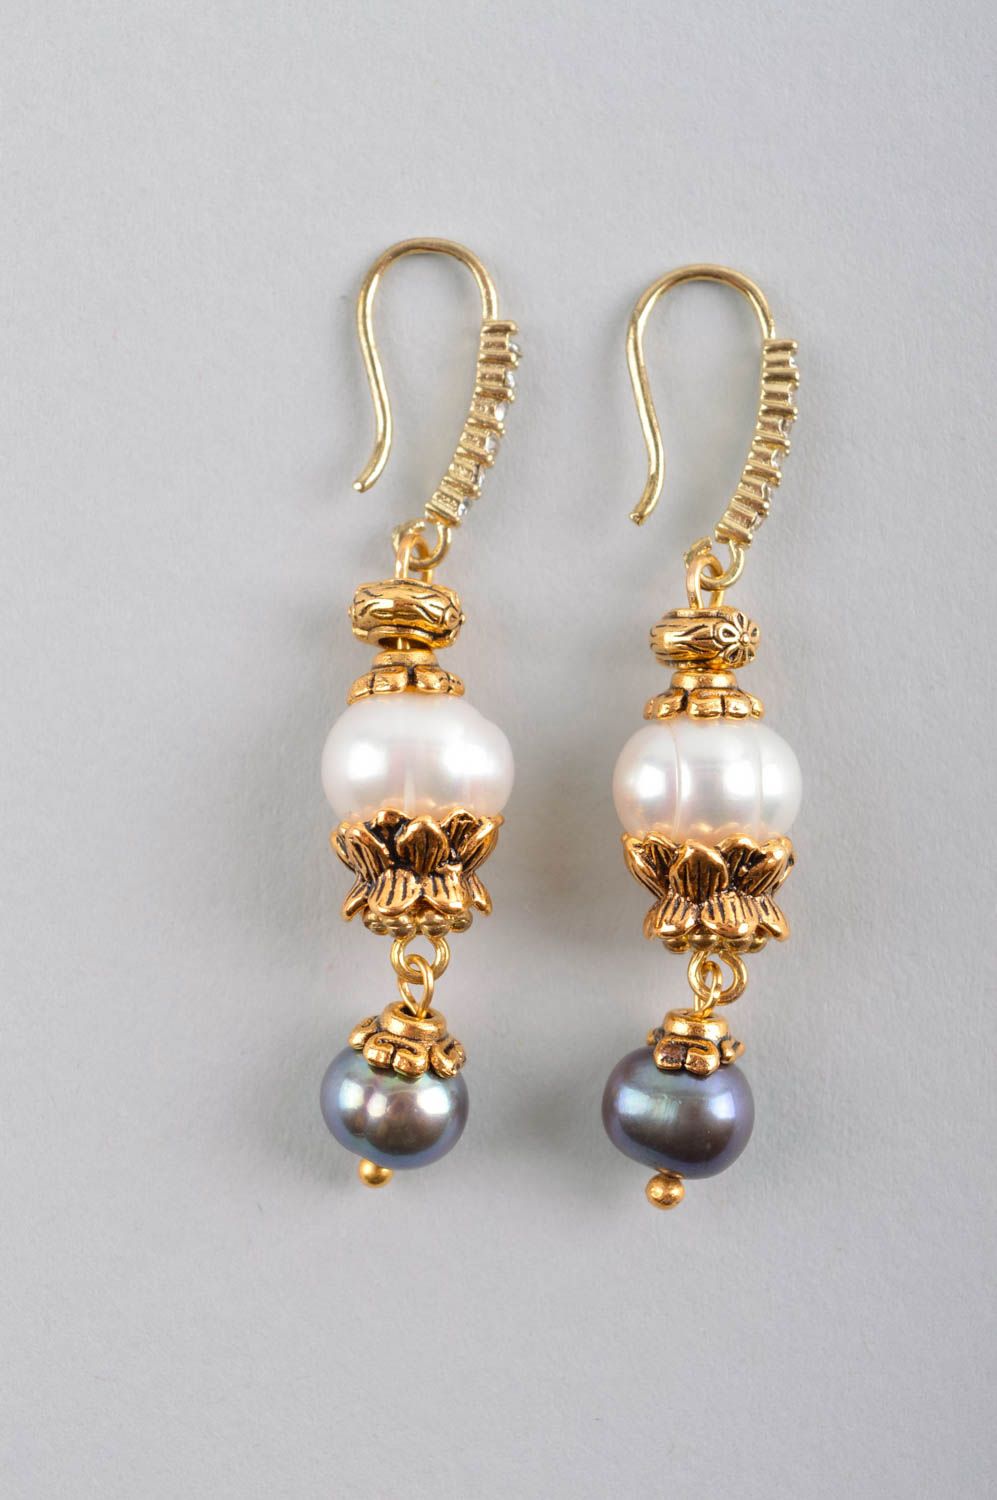 Handmade earrings long earrings fashion jewelry designer accessories gift ideas photo 3